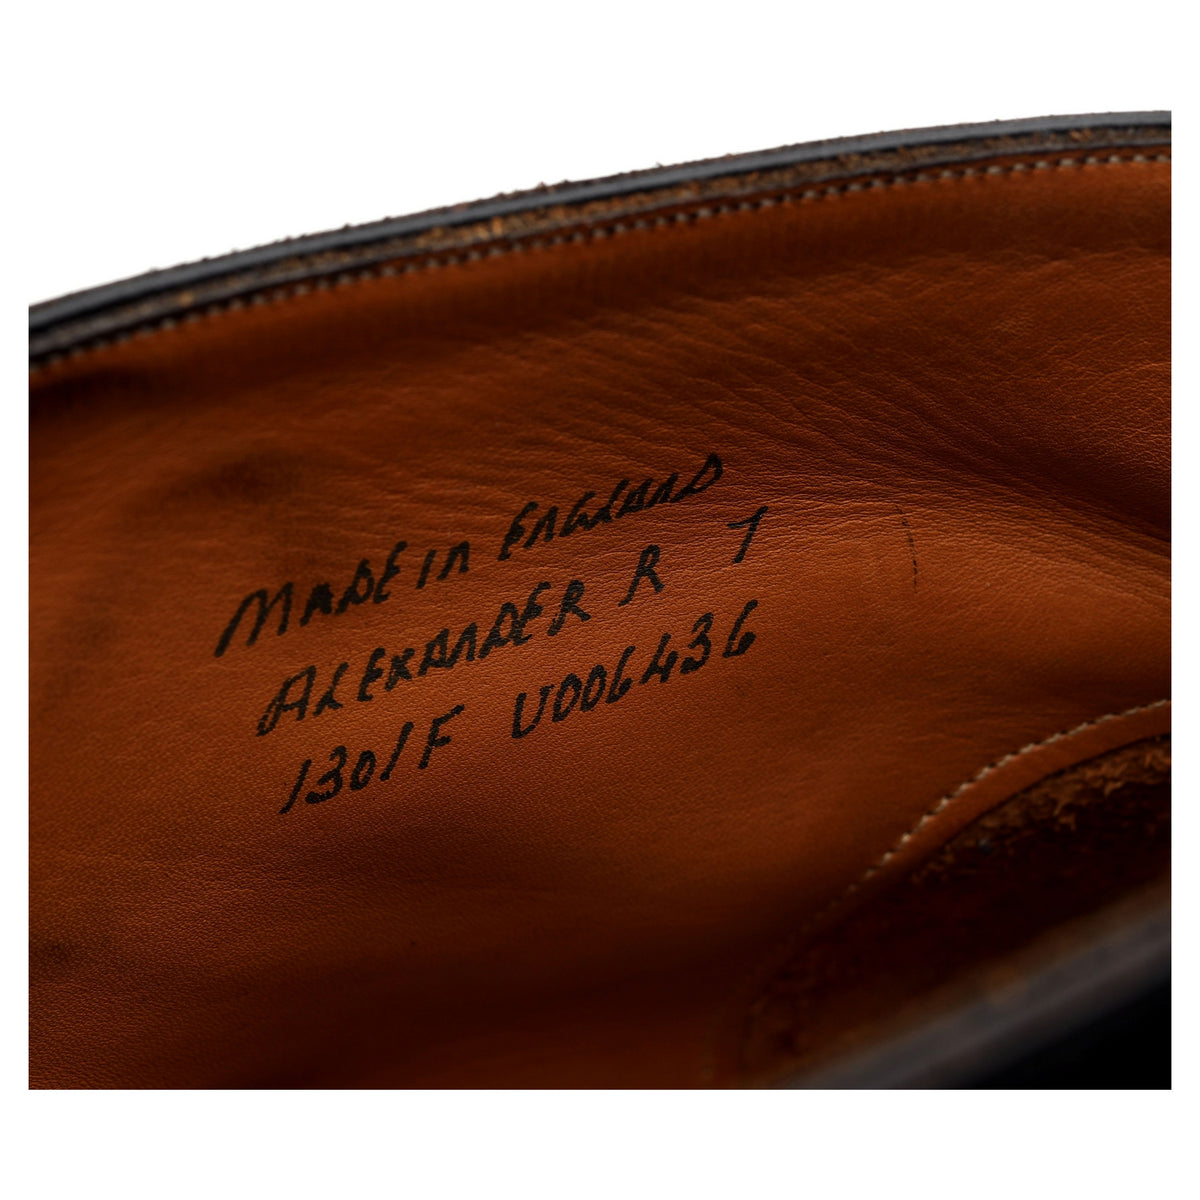 &#39;Alexander&#39; Black Leather Boots UK 7 F